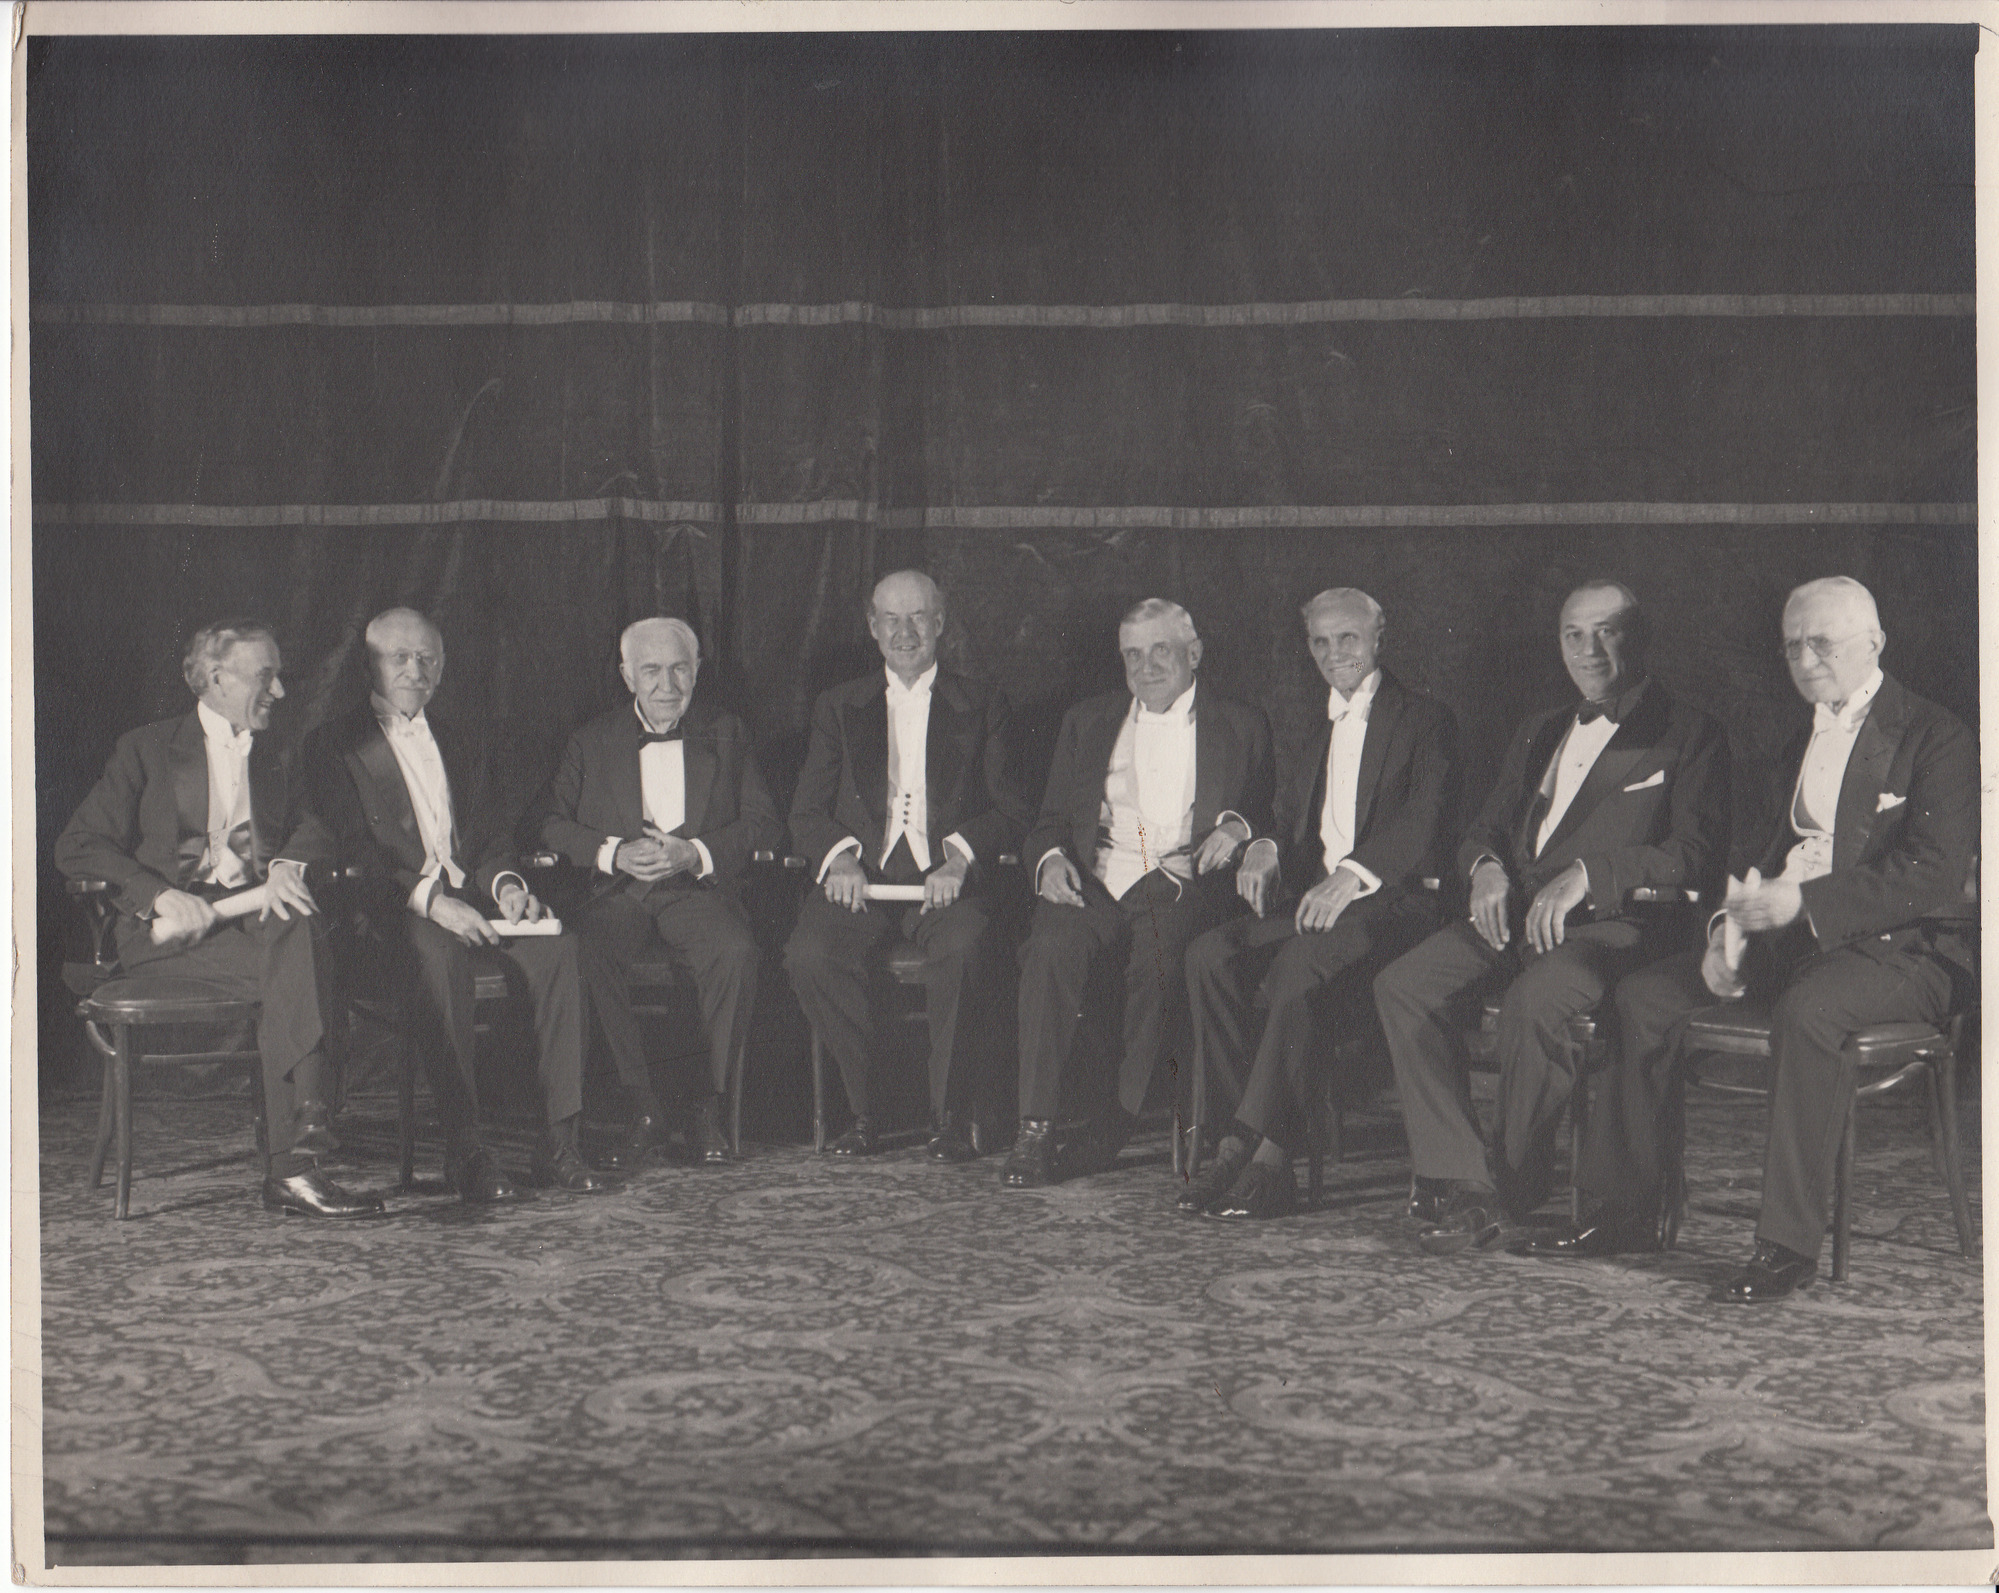 Left to right, Harvey Firestone, Julius Rosenwald, Thomas Edison, Thomas Lipton, Charles M. Schwab, Henry Ford, Walter P. Chrysler, and George Eastman.